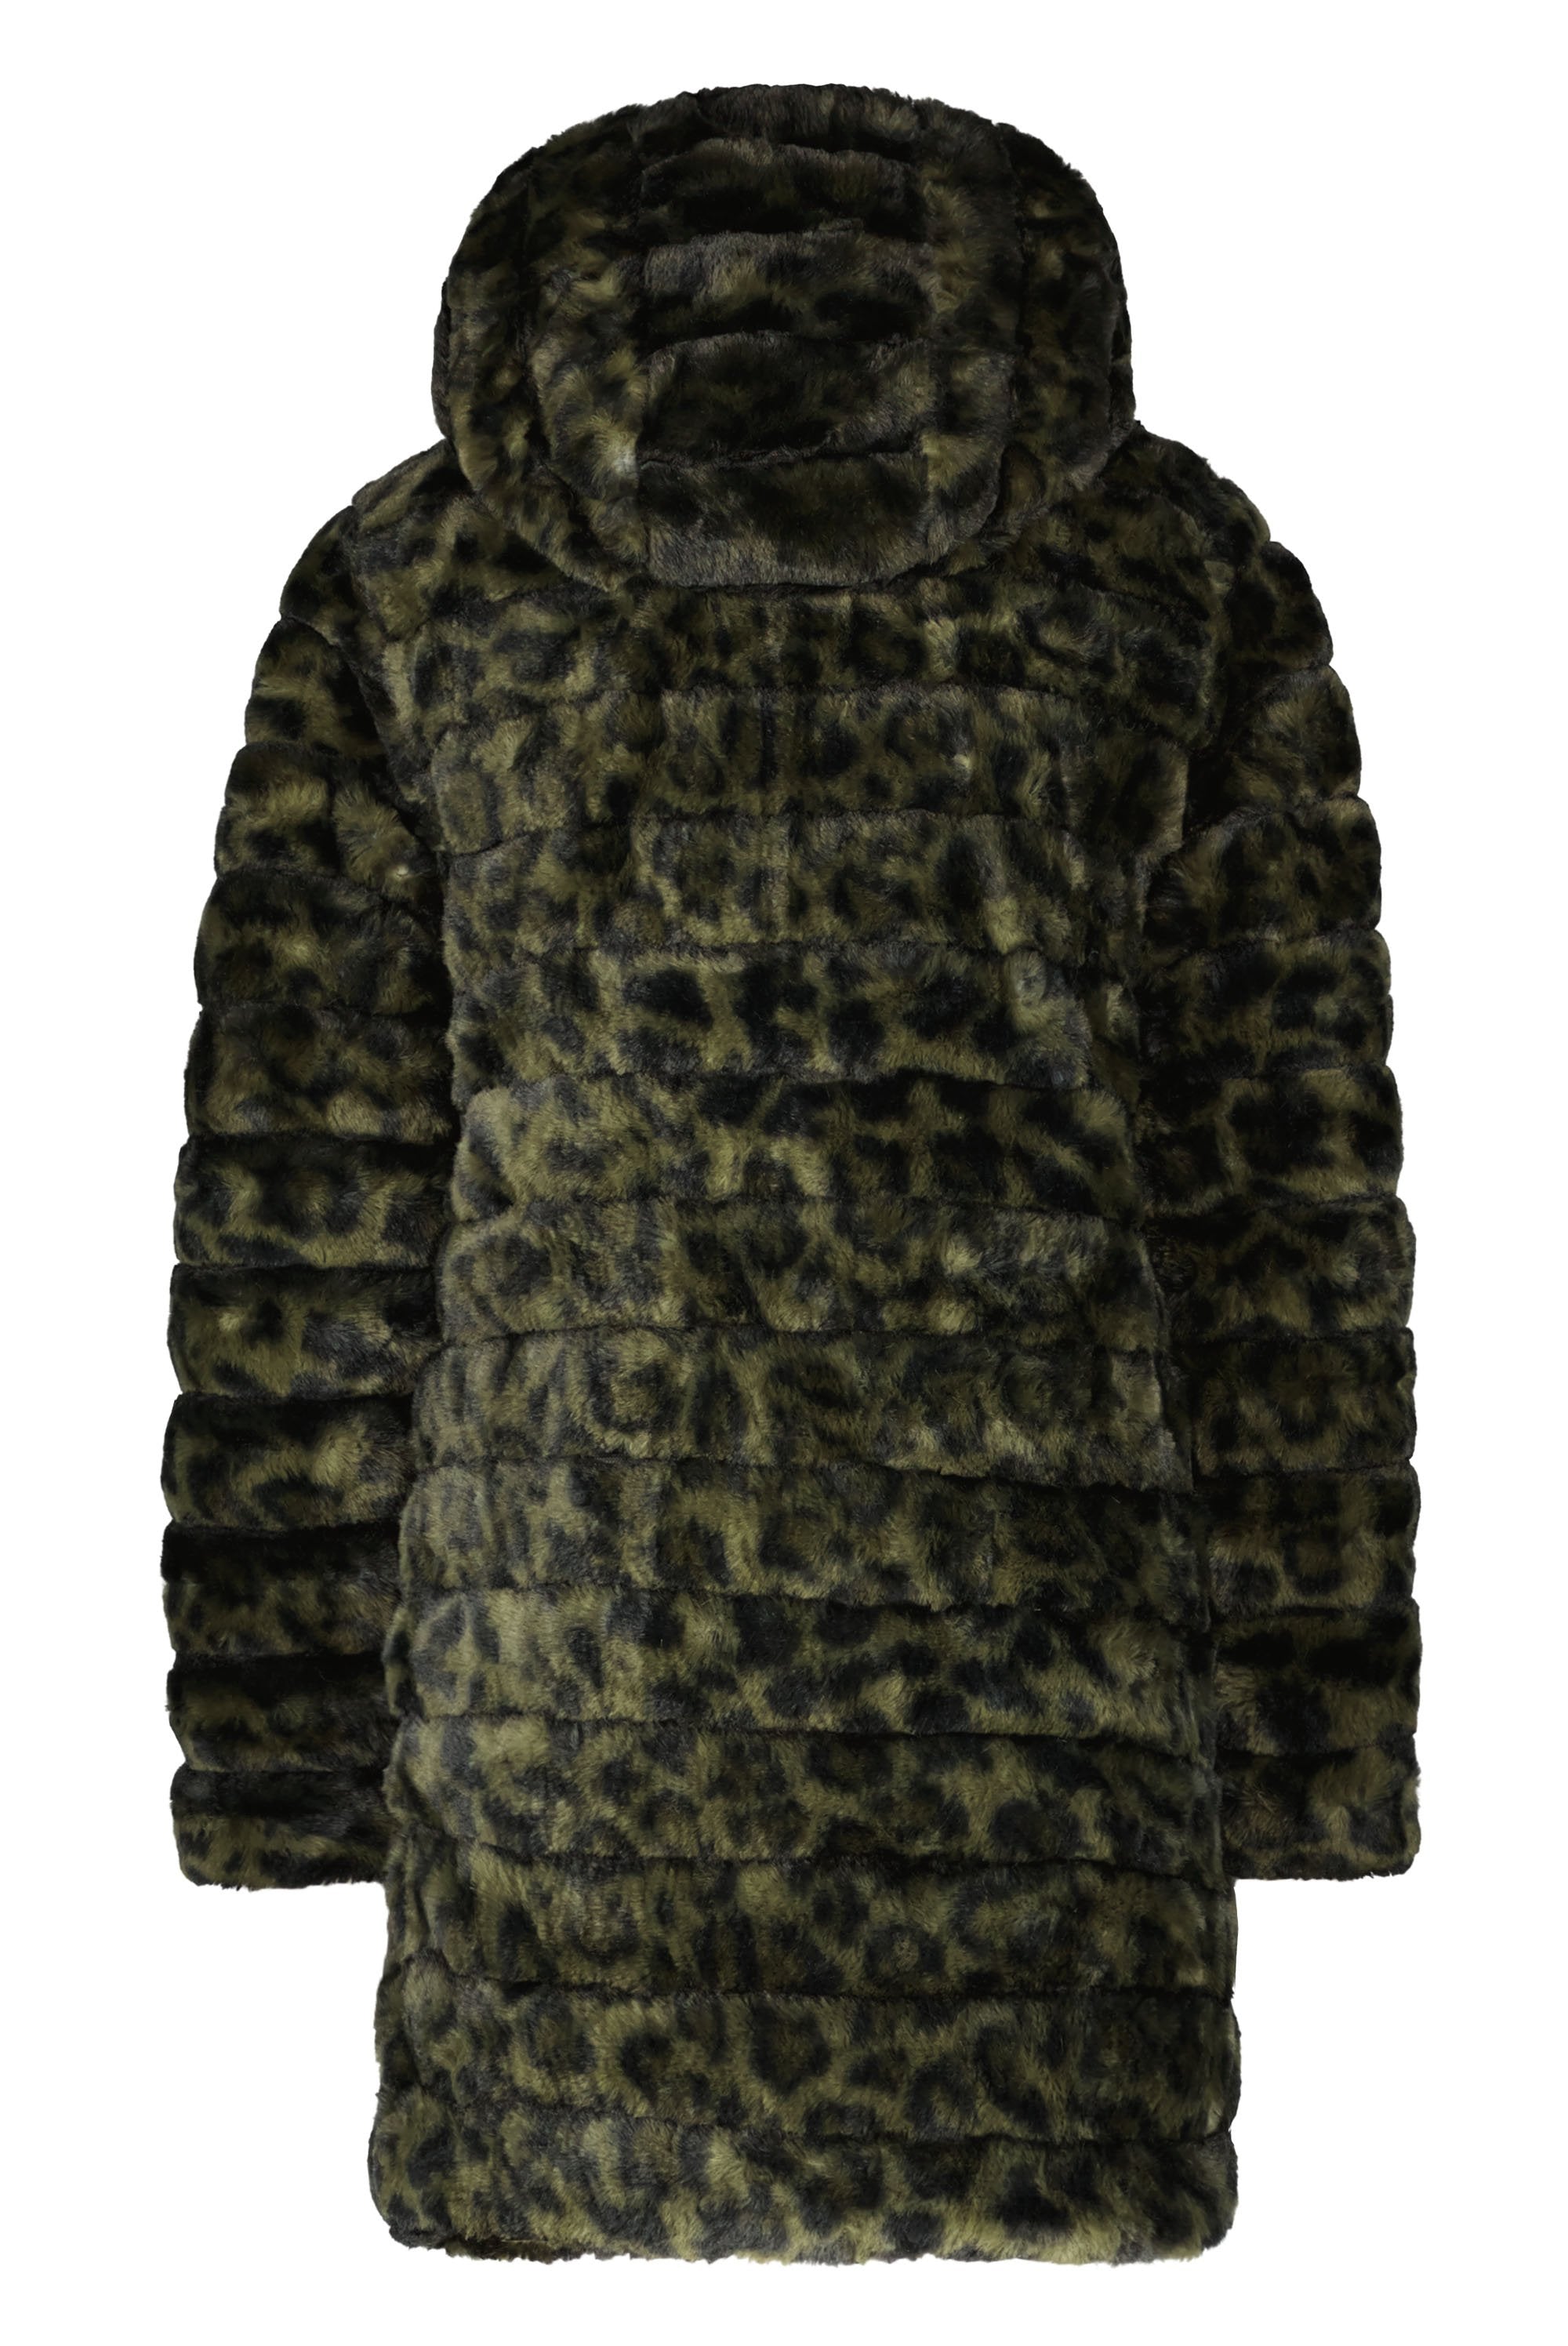 Meisjes Flo girls reversible hooded long jacket van Like Flo in de kleur Army in maat 152.